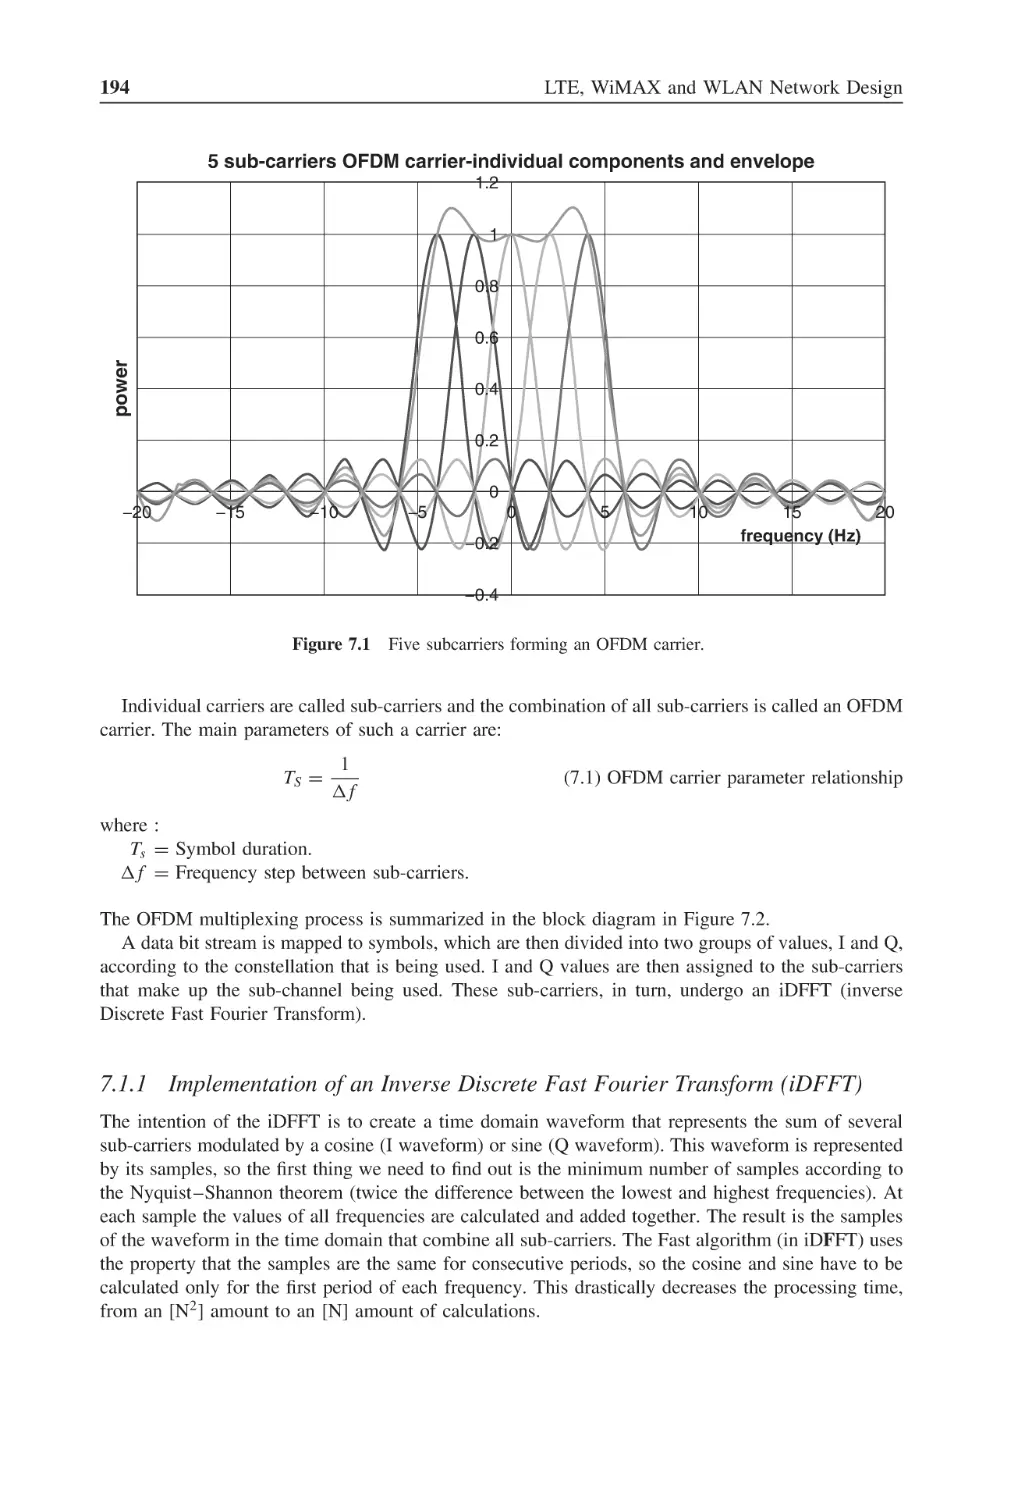 7.1.1 Implementation of an Inverse Discrete Fast Fourier Transform (iDFFT)